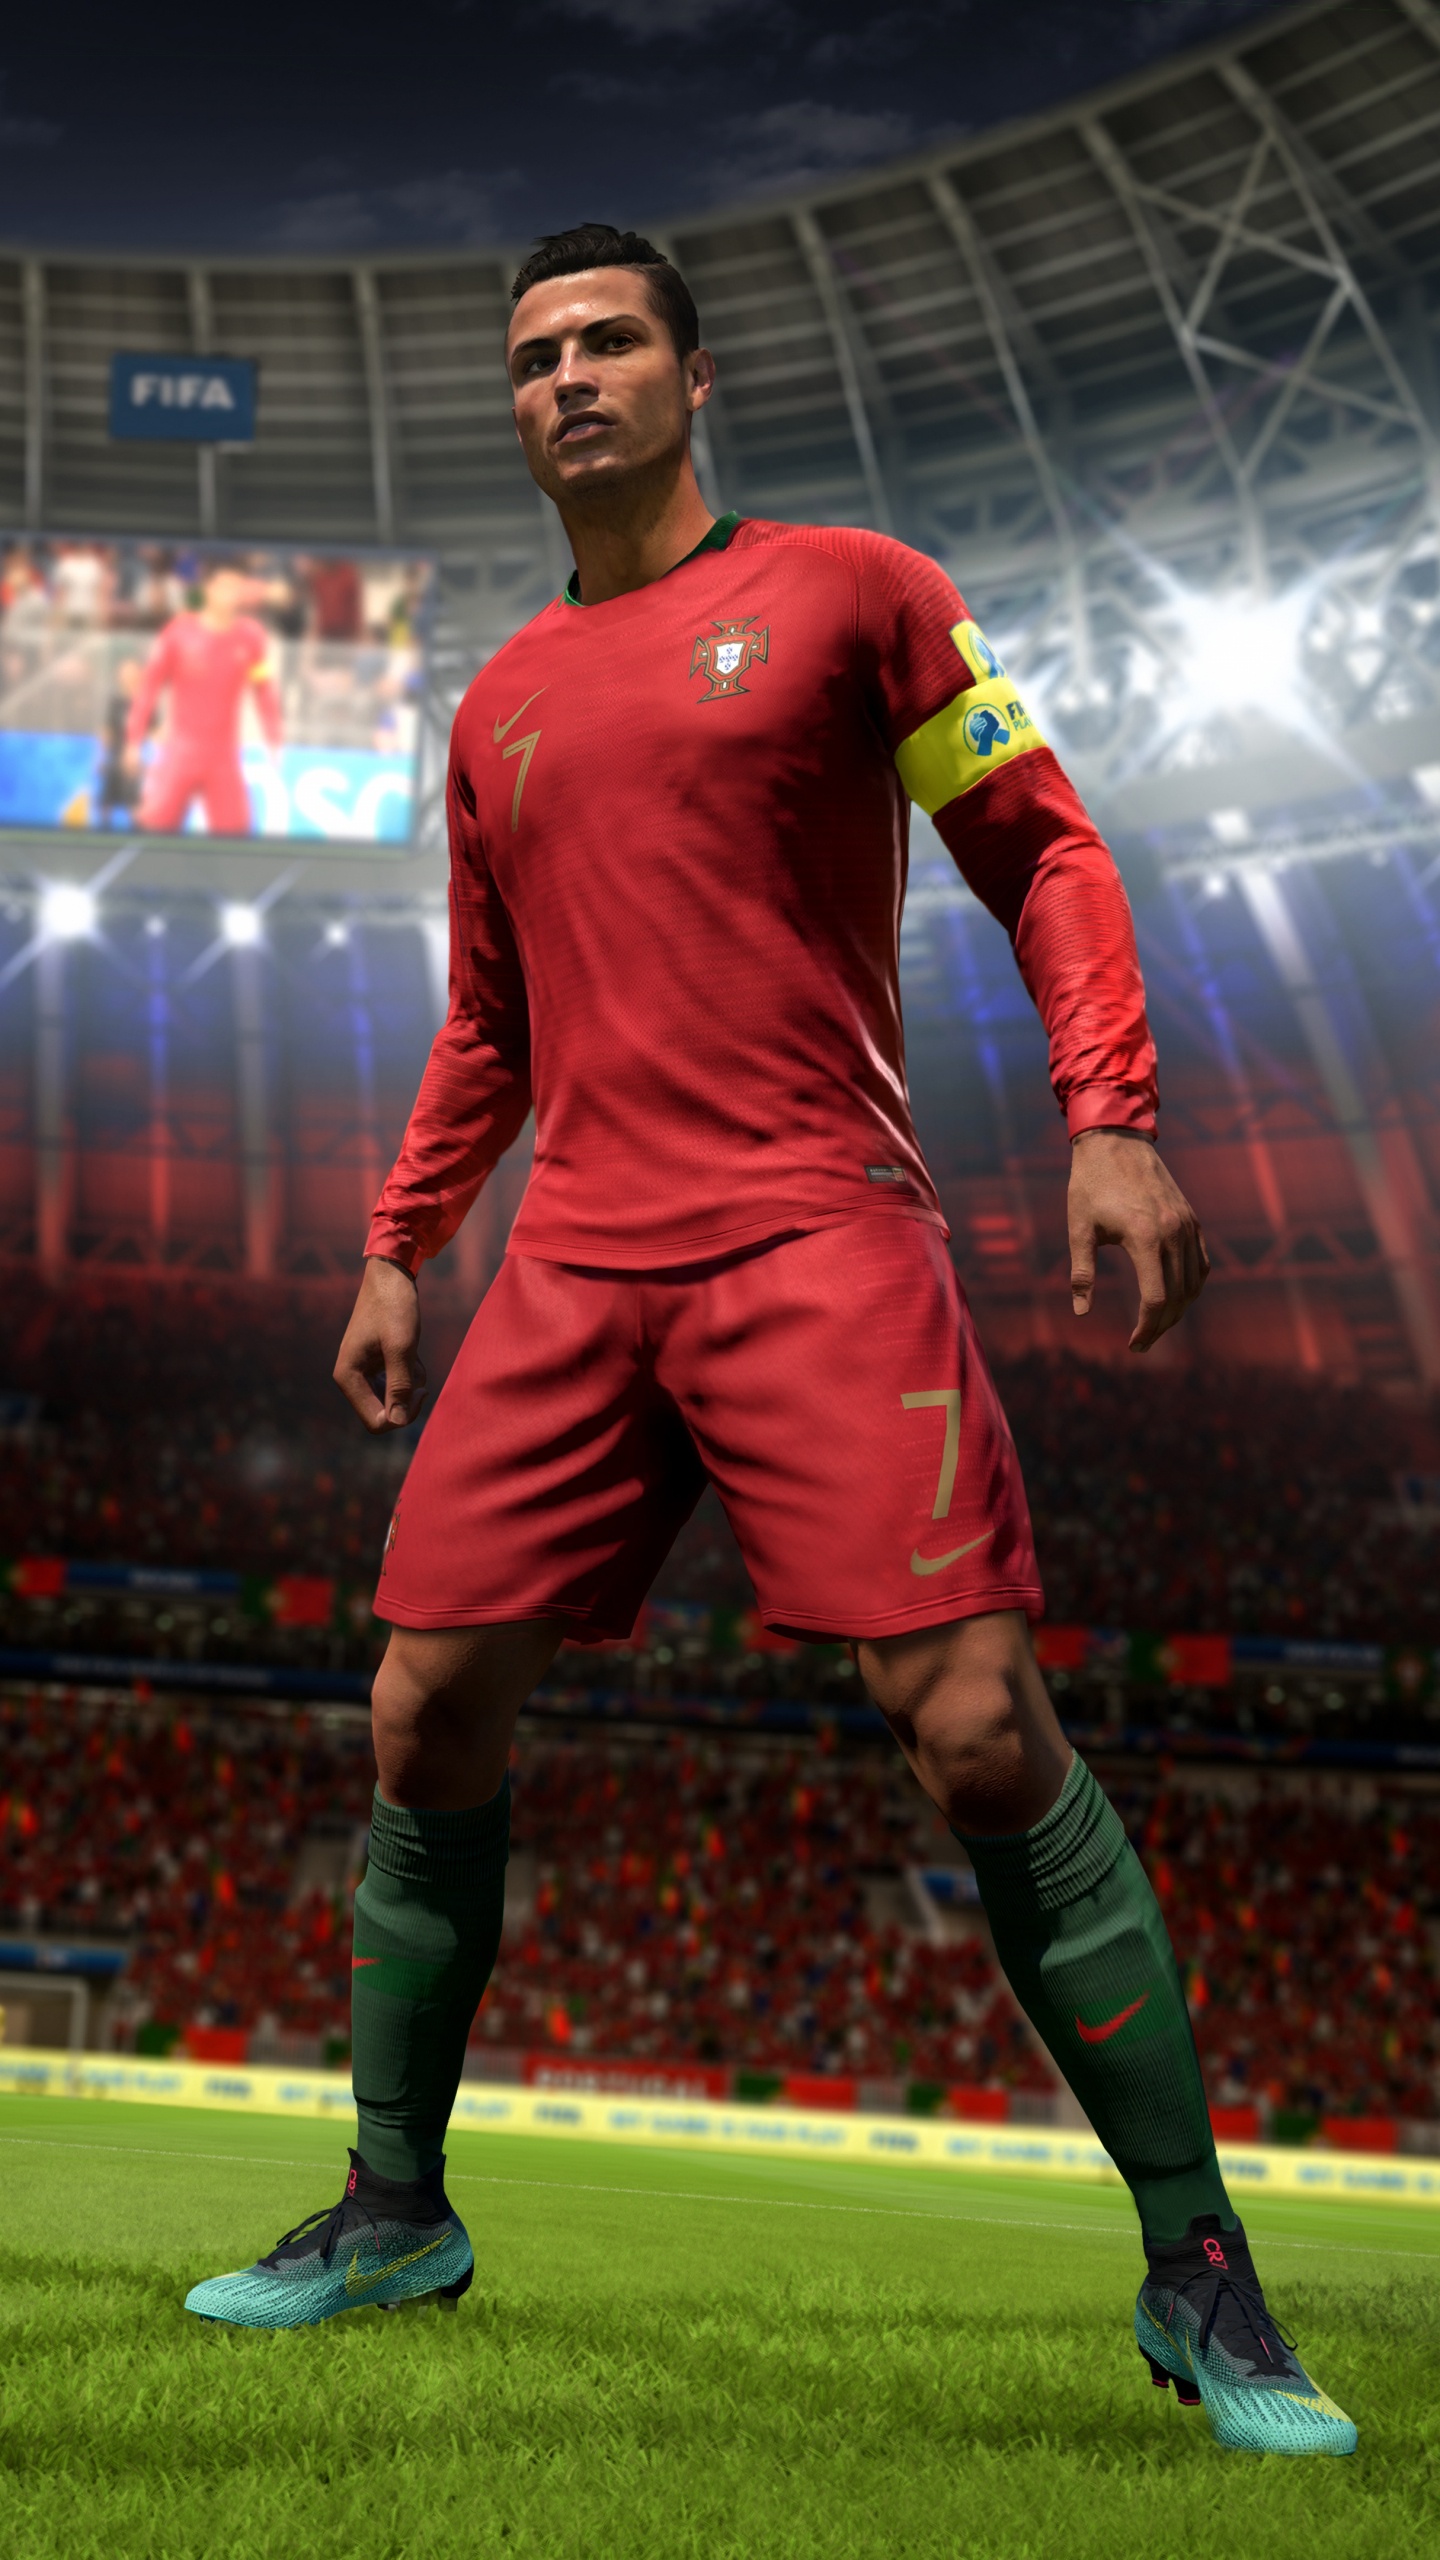 Fifa 18, 2018 la Coupe du Monde, ea Sports, Electronic Arts, Playstation 4. Wallpaper in 1440x2560 Resolution